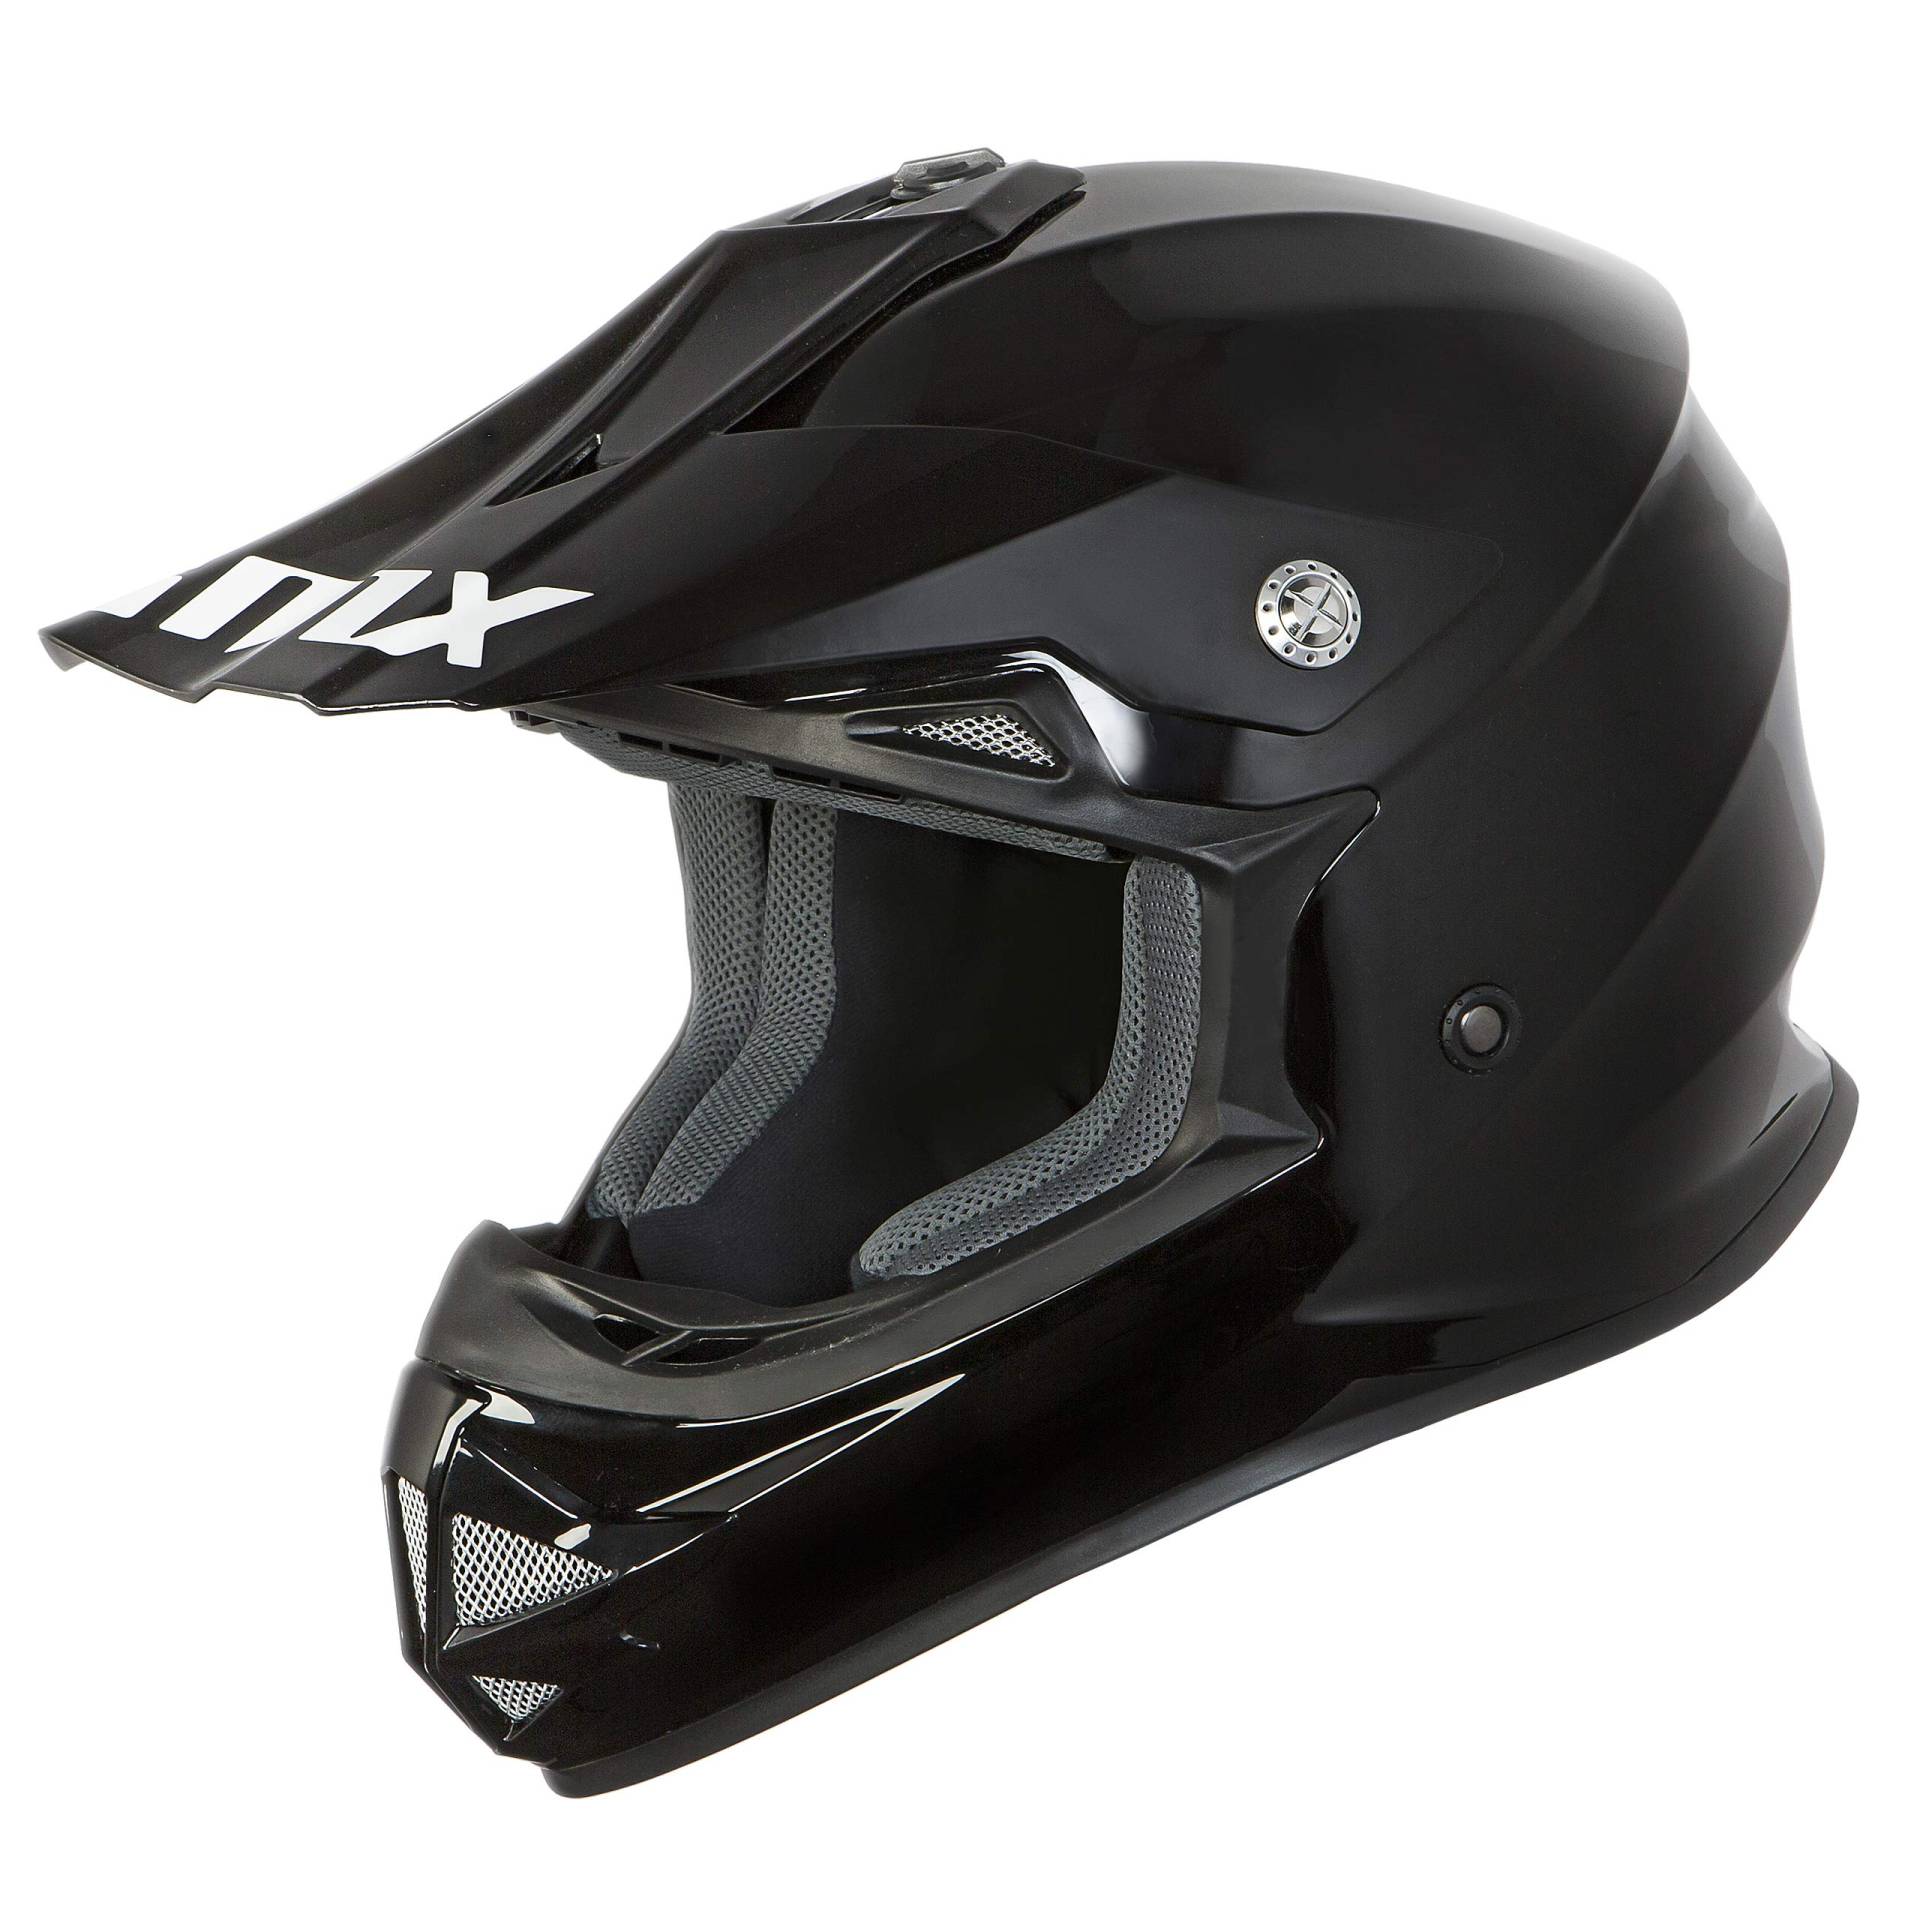 IMX RACING FMX-1 Motorradhelm für Motocross Enduro | Polycarbonatschale | Abnehmbare Wangenpolster und Helmfutter | Mikrometrischer Verschluss | Belüftung von IMX RACING